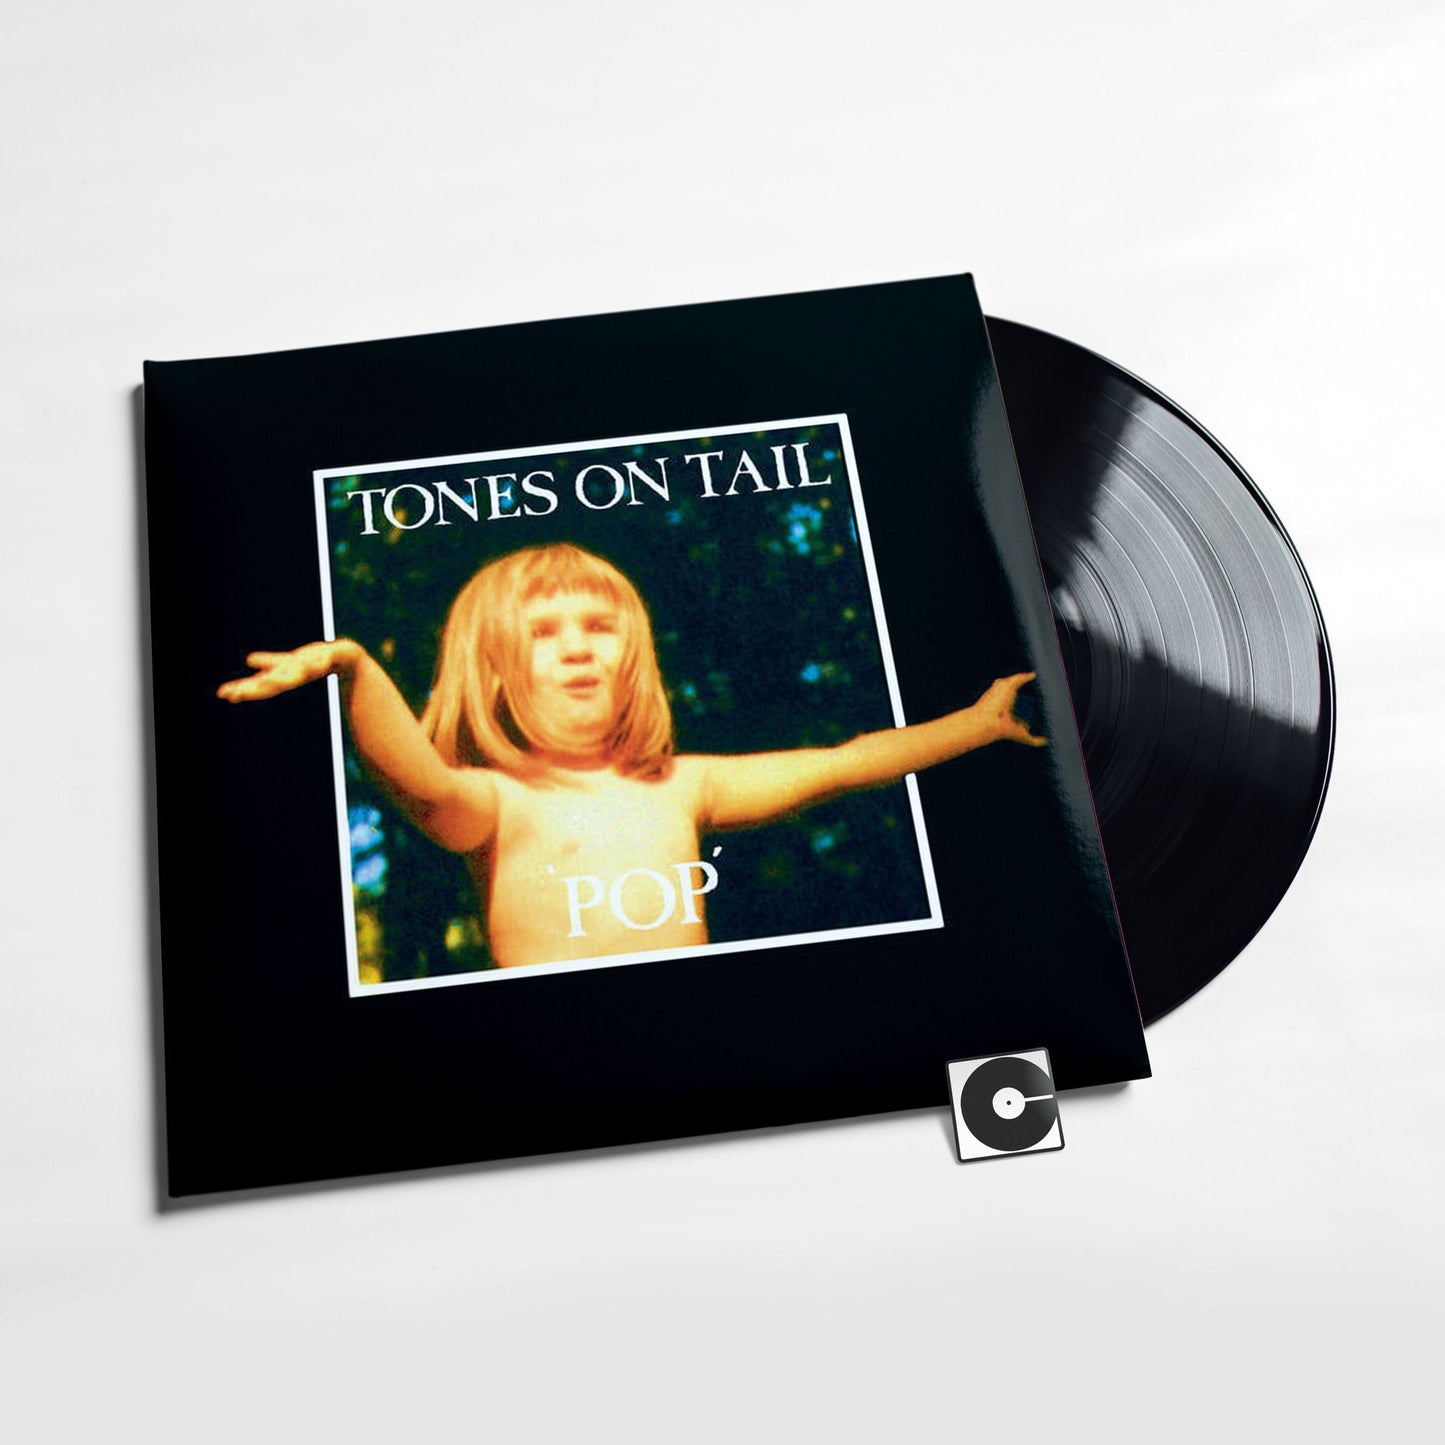 Tones On Tail - "Pop"